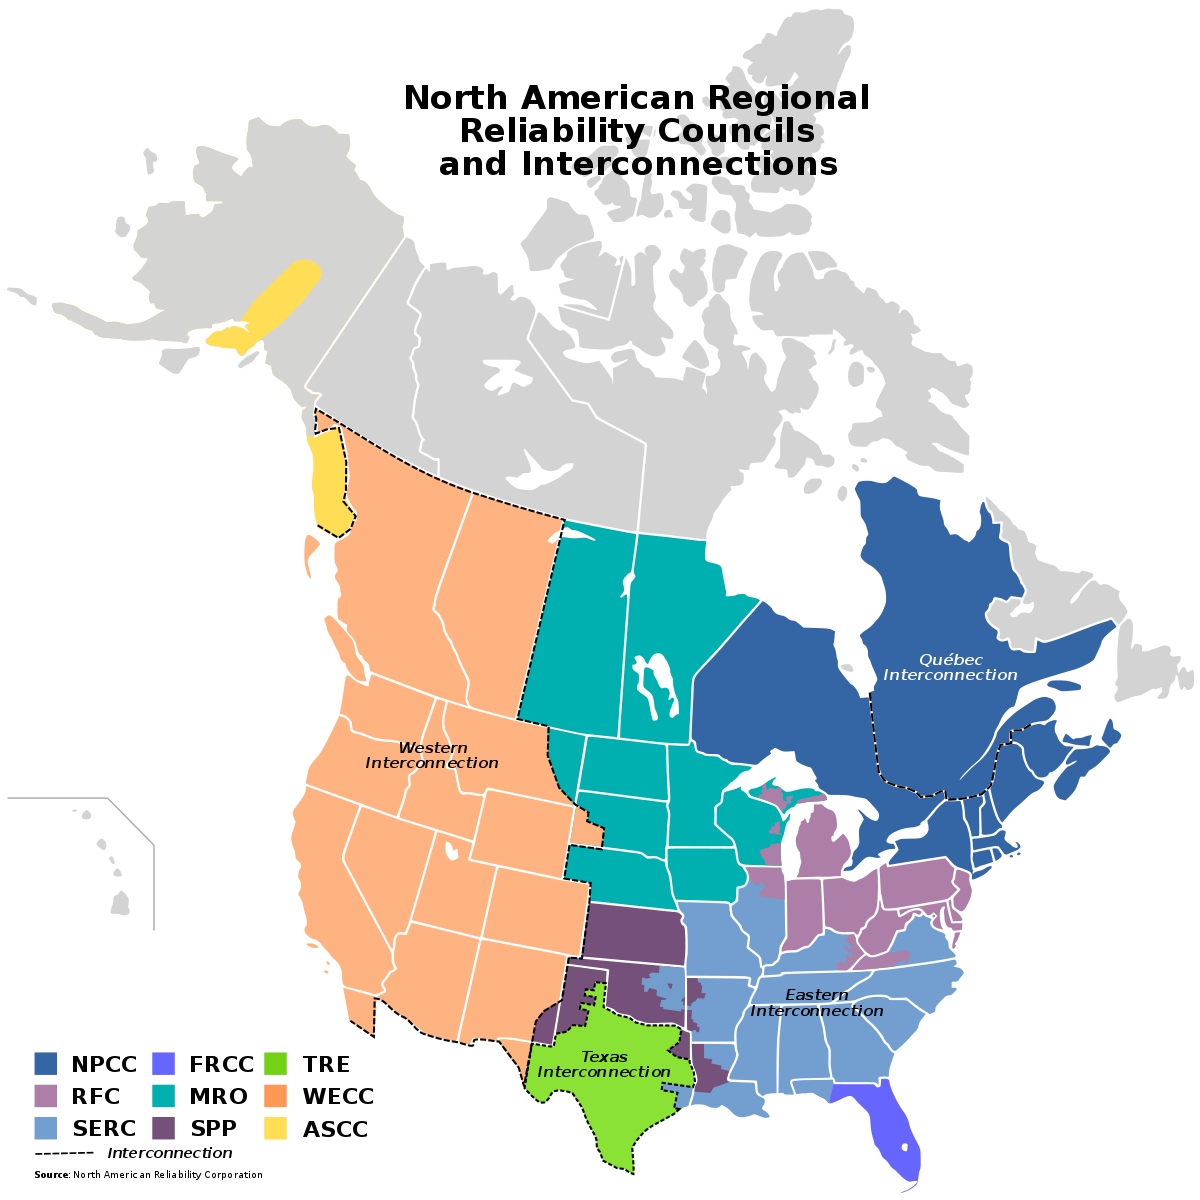 North American Regional reliability councils